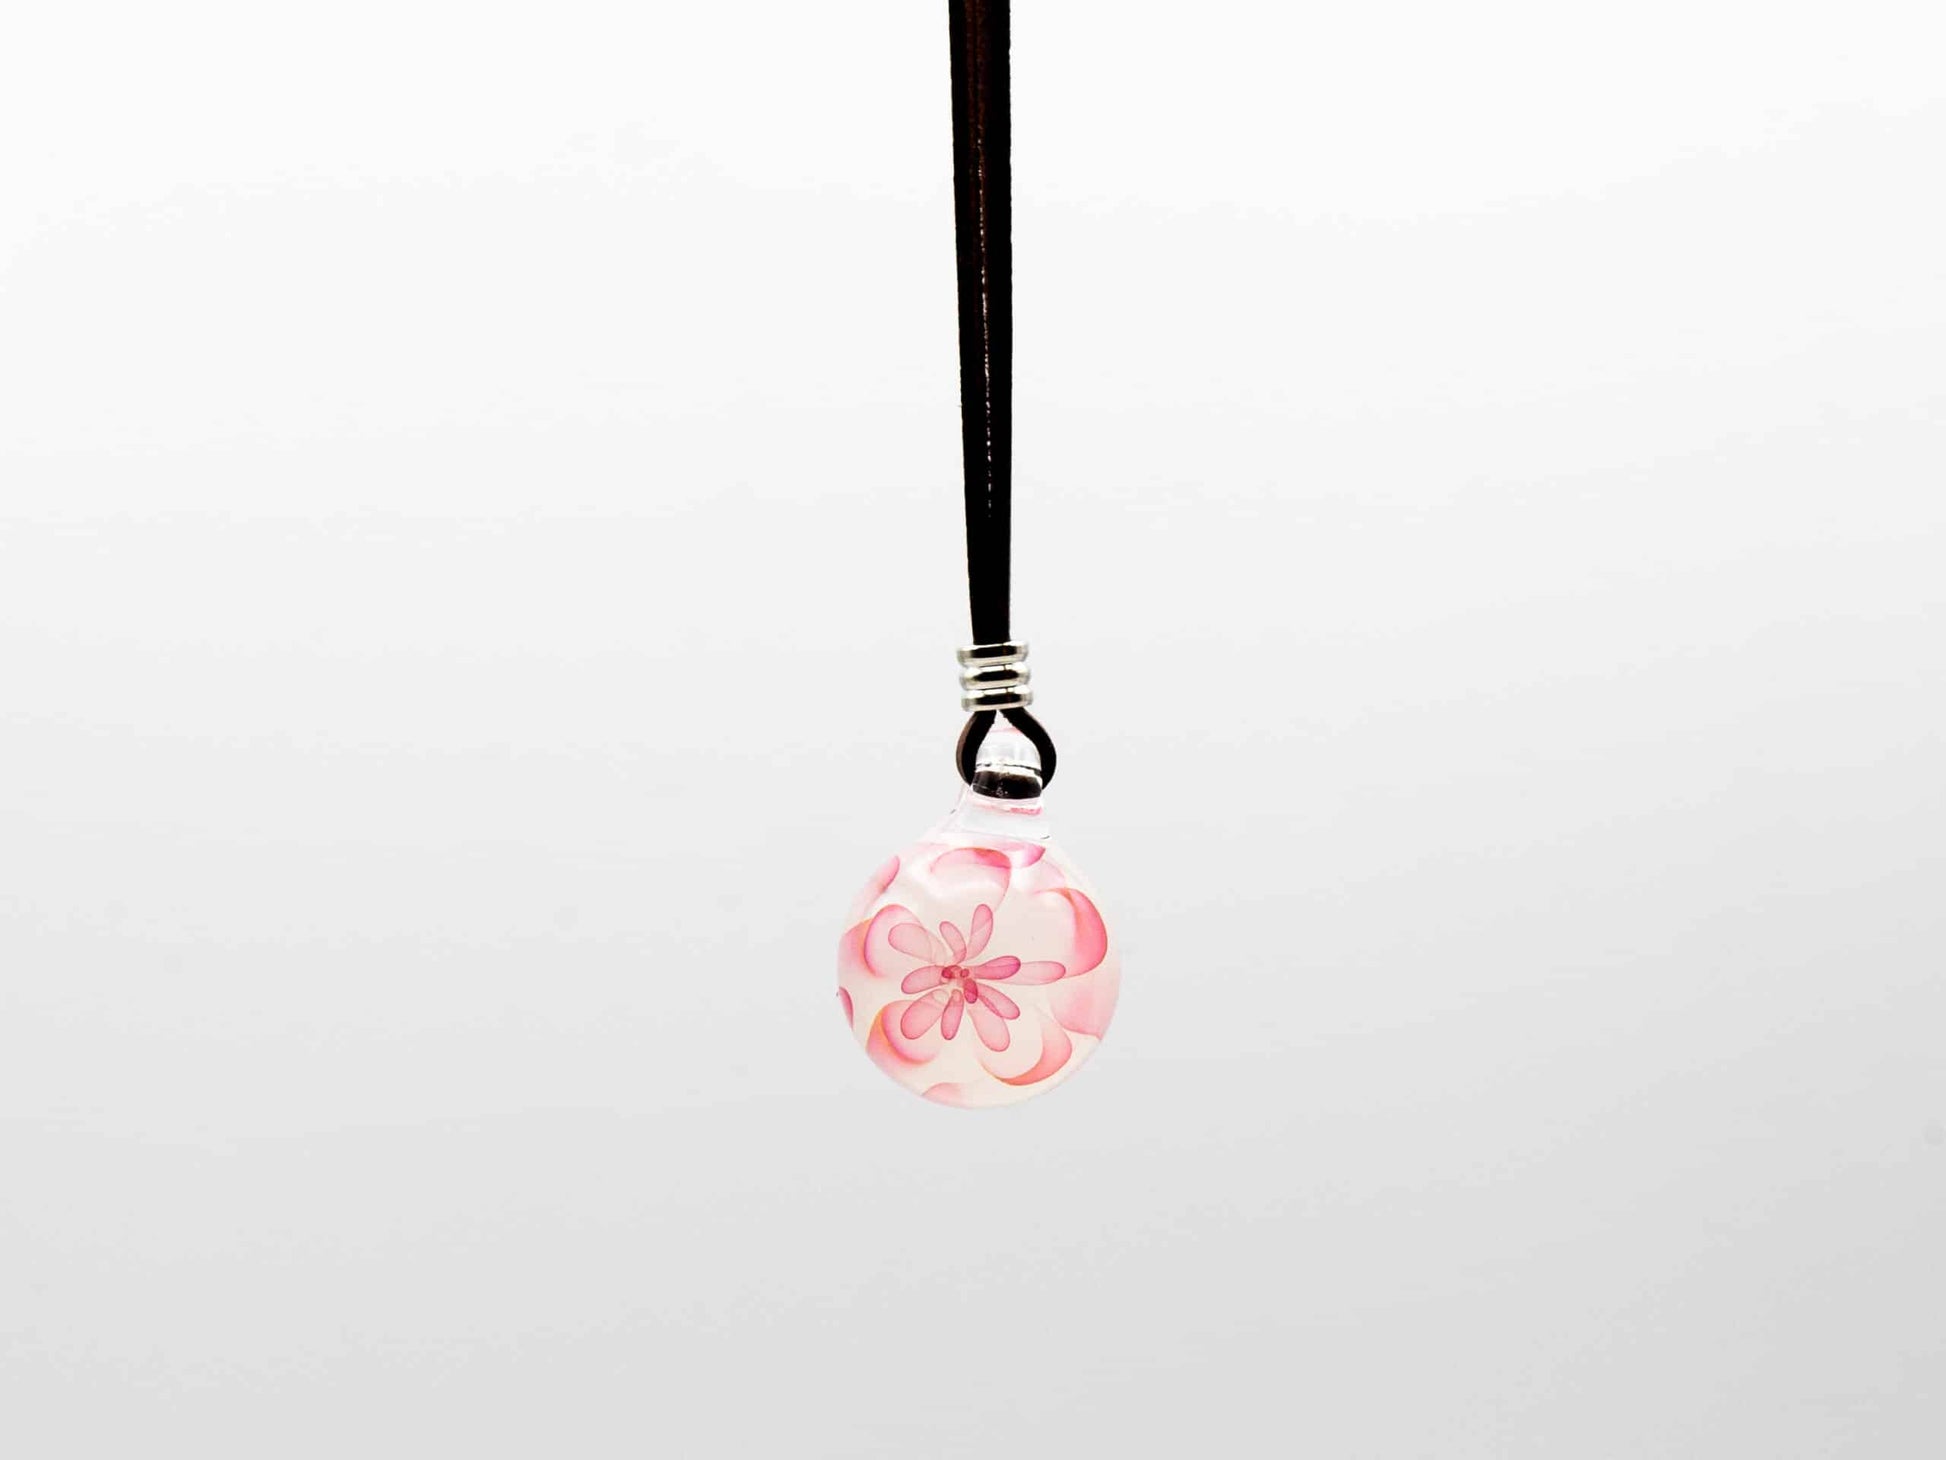 exquisite glass pendant - Medium White Cherry Blossom Pendant by ColorWorks